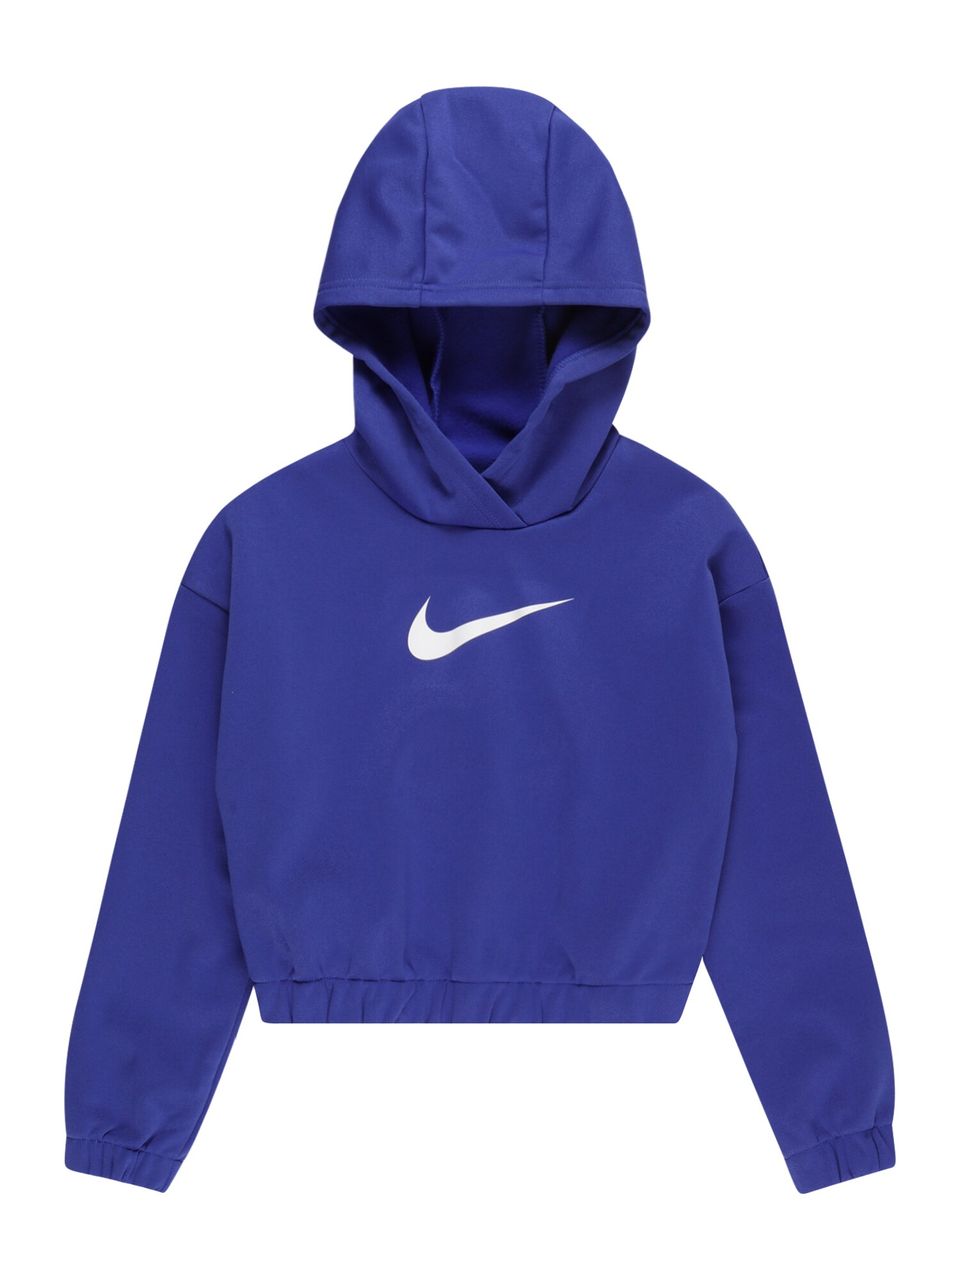 Sportief sweatshirt  donkerblauw / wit